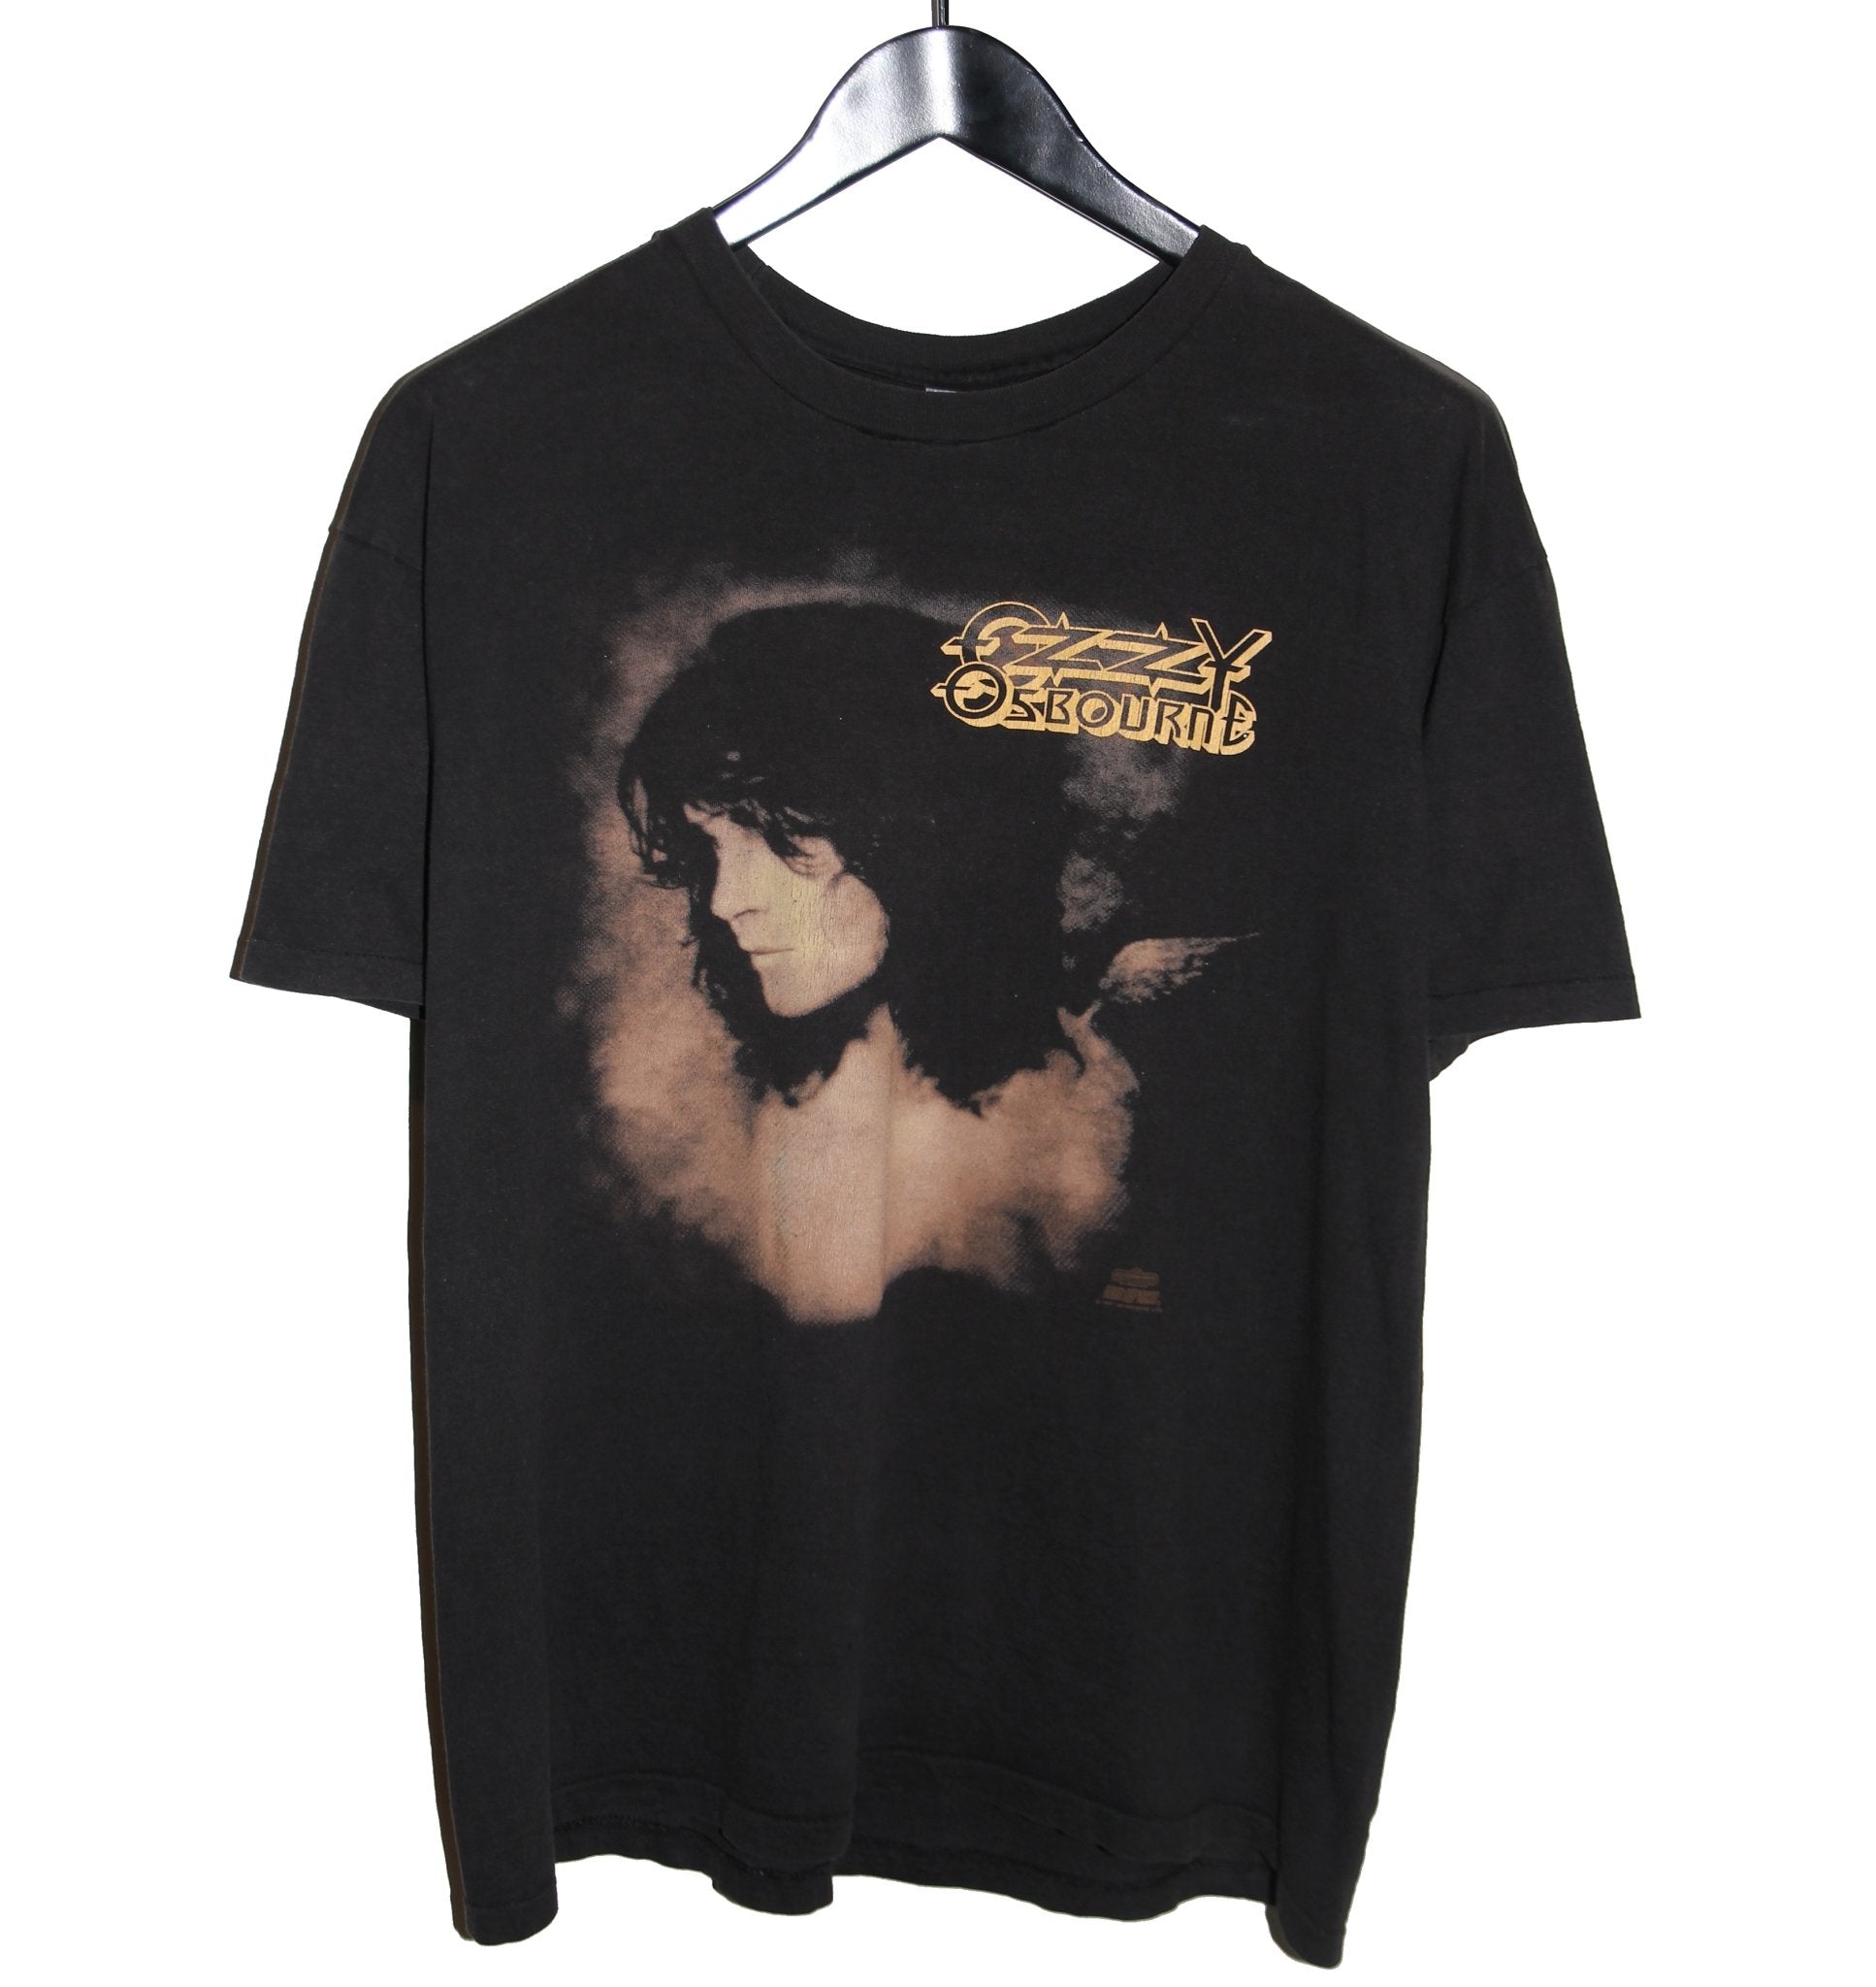 Ozzy Osbourne 1991 No More Tears Album Shirt - Faded AU